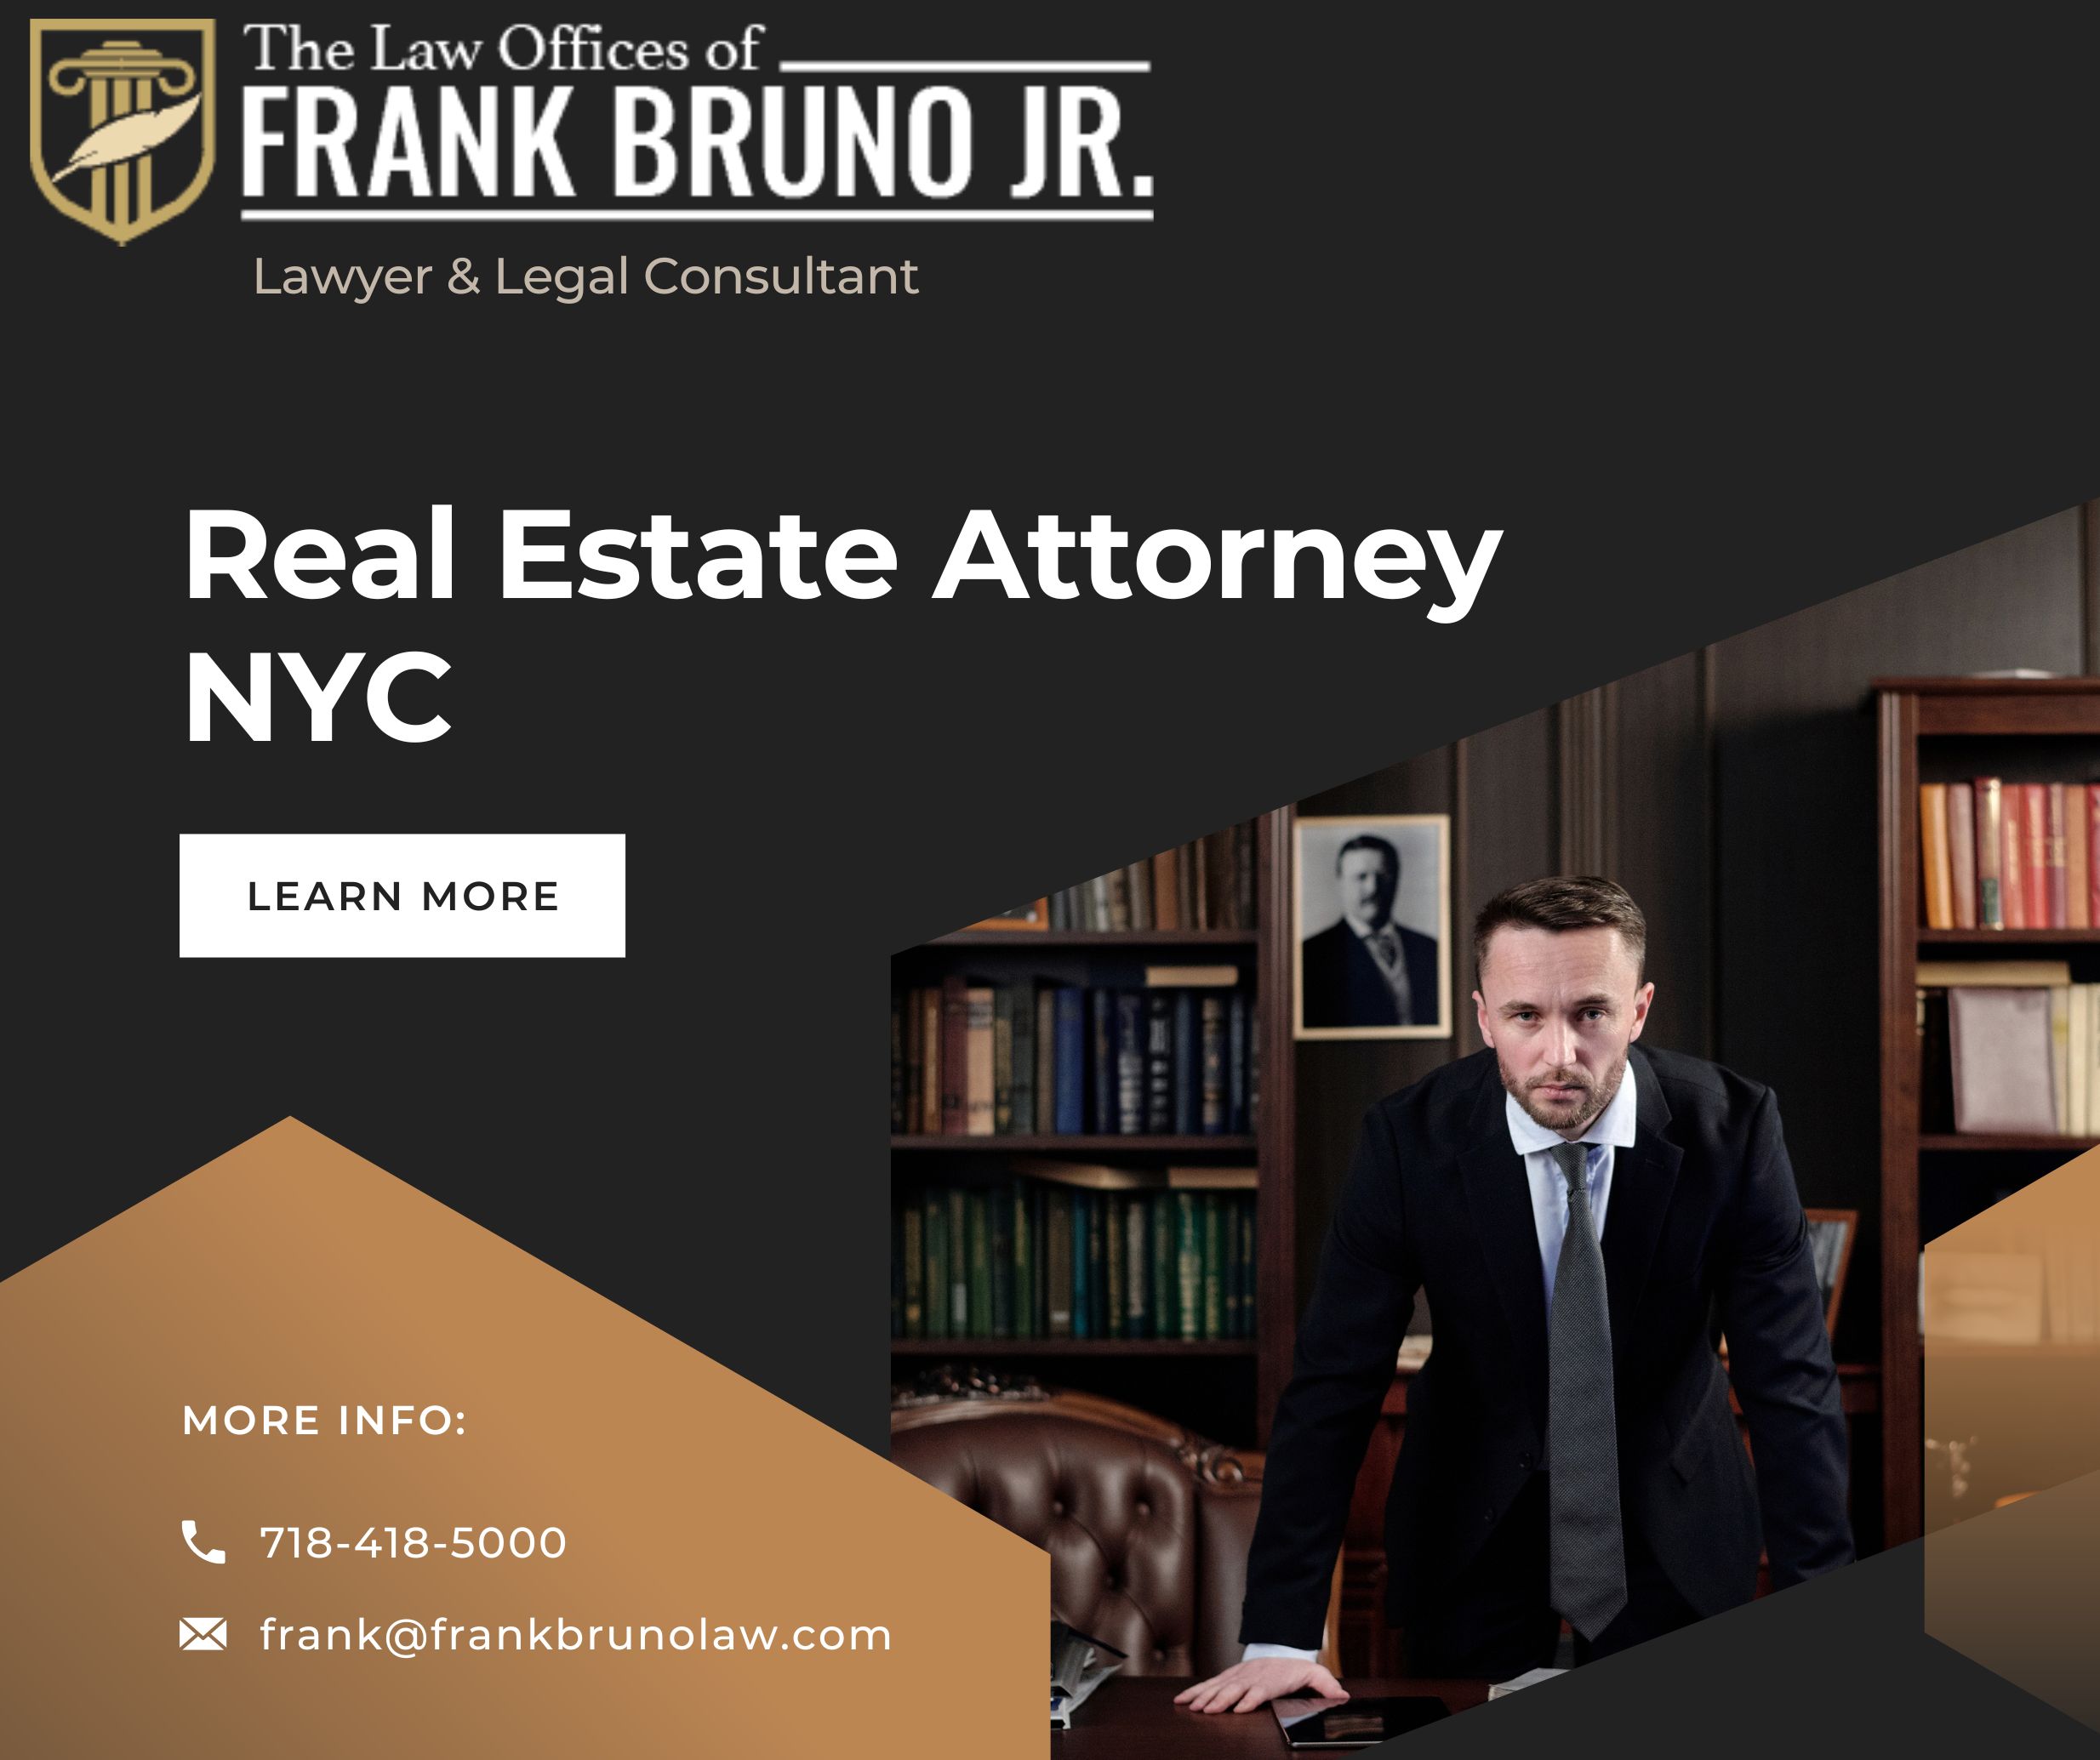 Real Estate Attorney NYC - New York - New York ID1553795 4